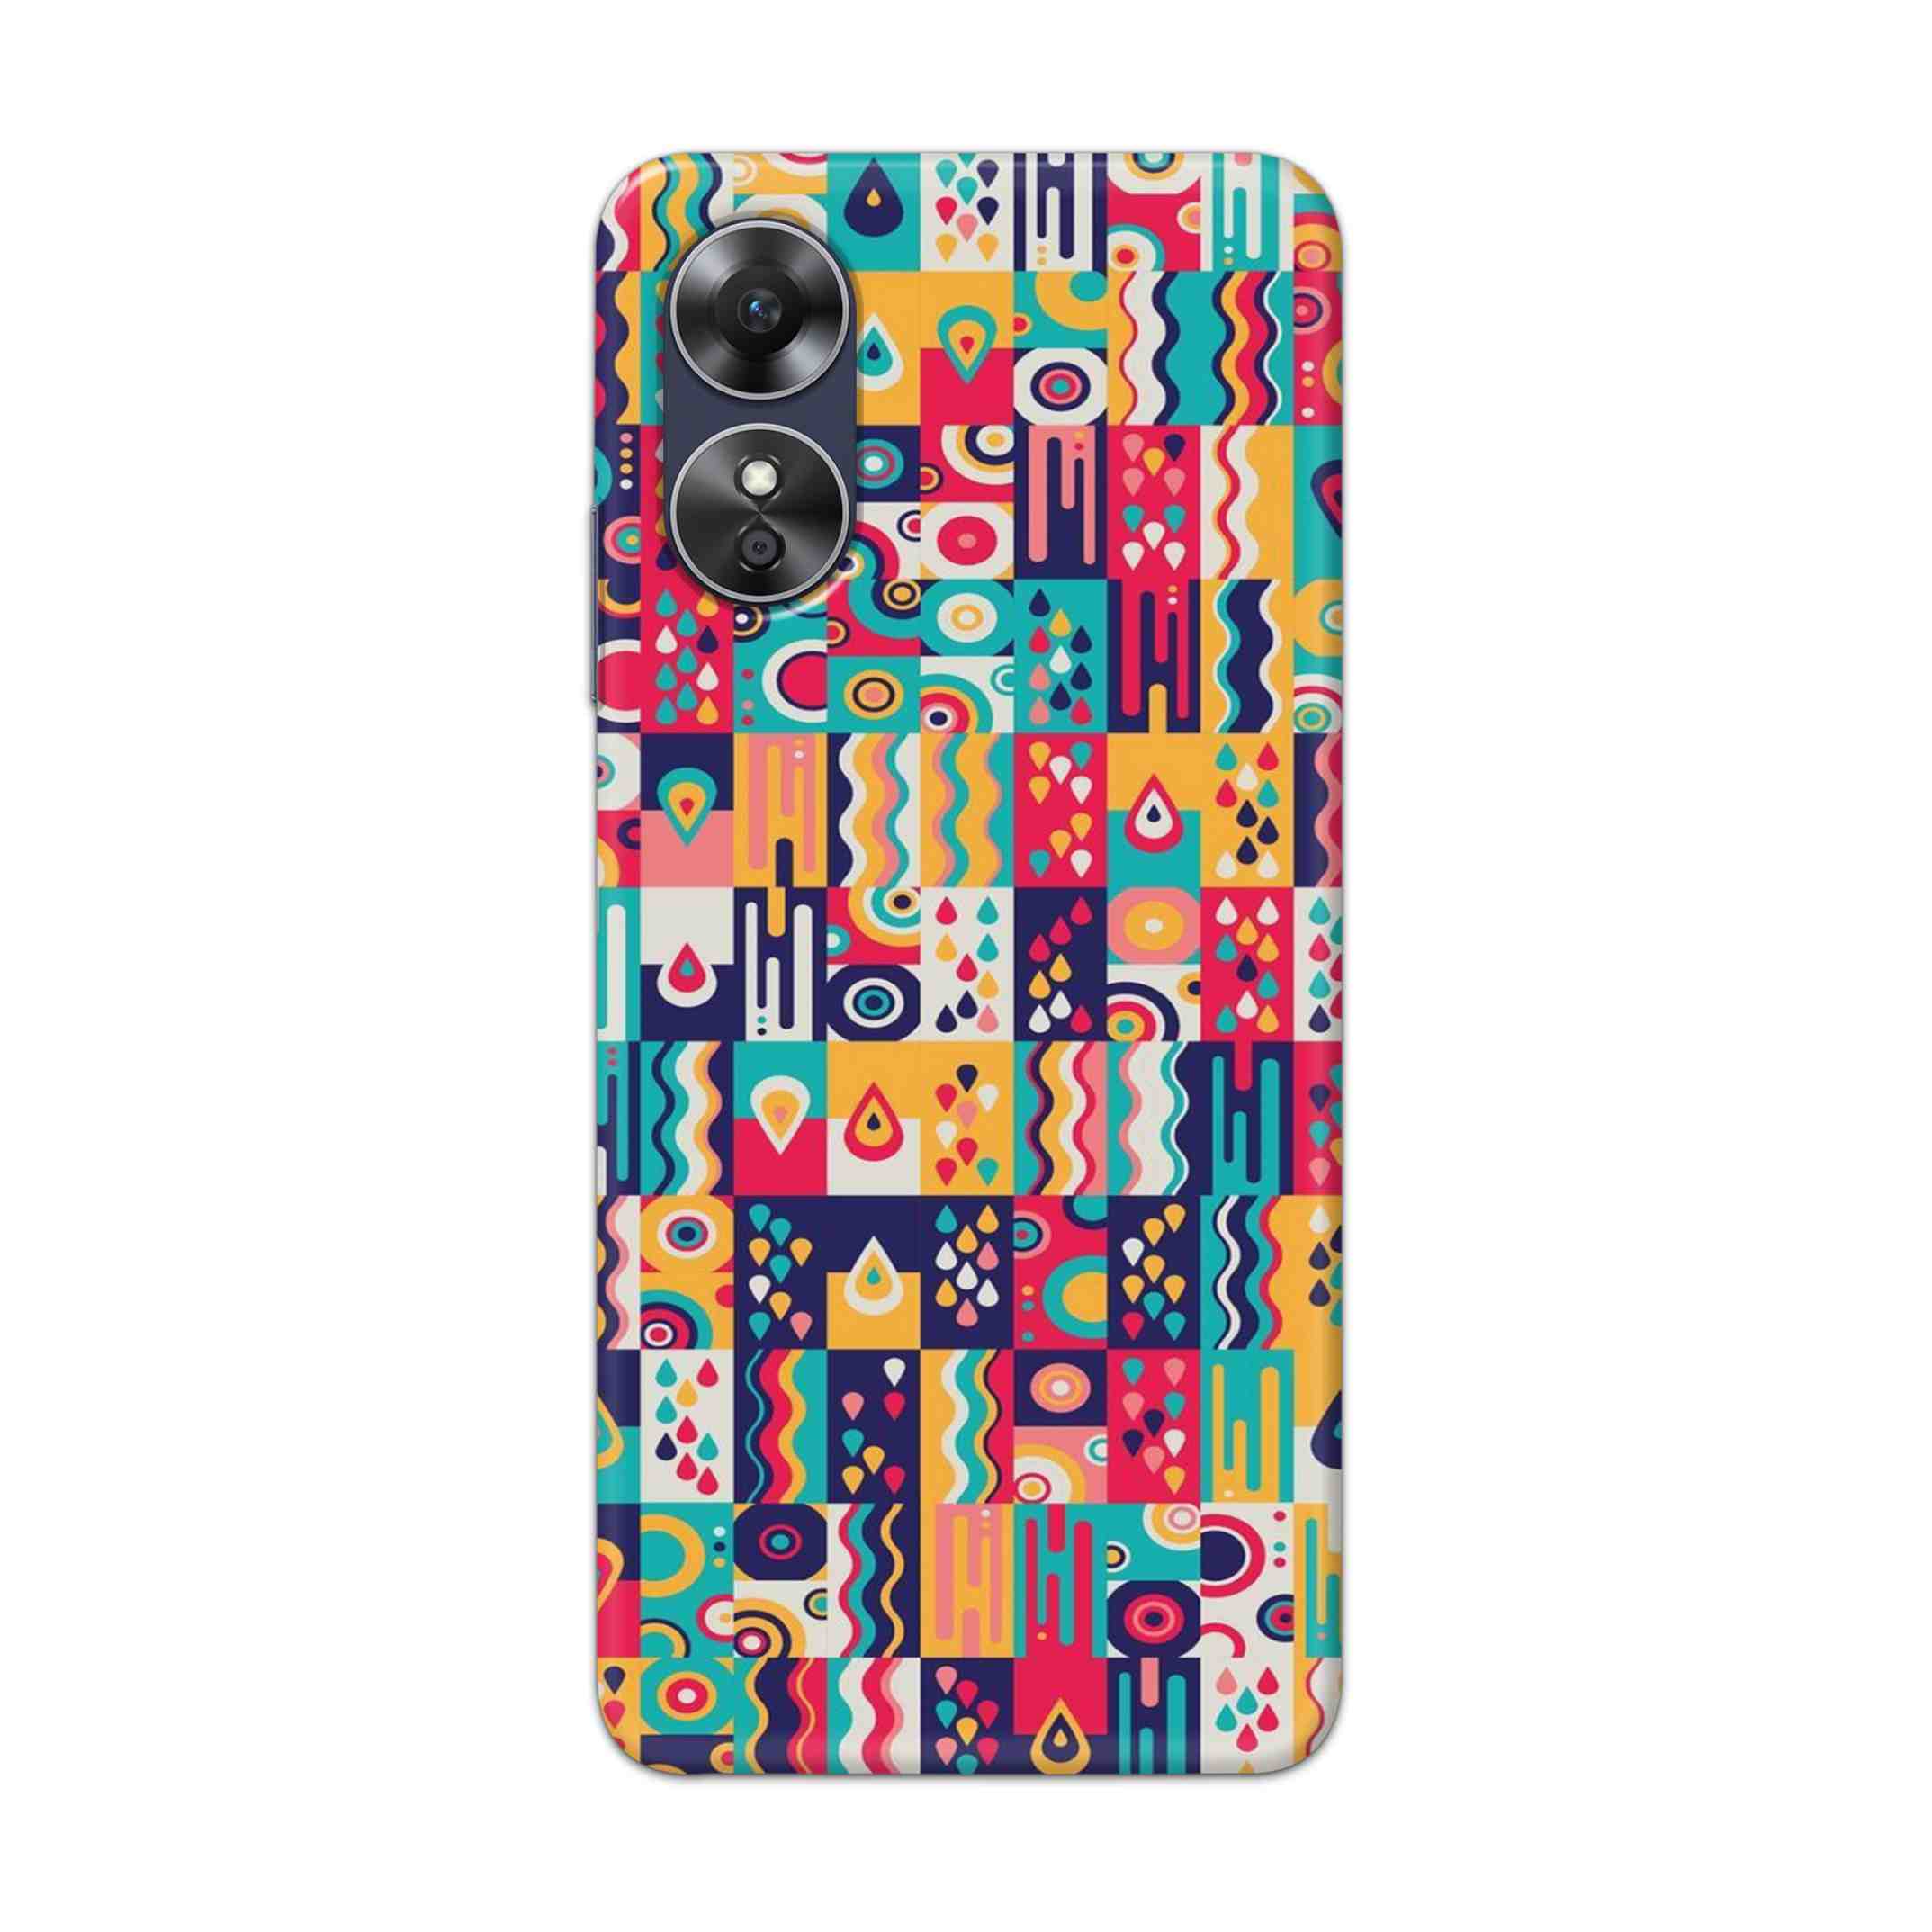 Buy Art Hard Back Mobile Phone Case Cover For Oppo A17 Online